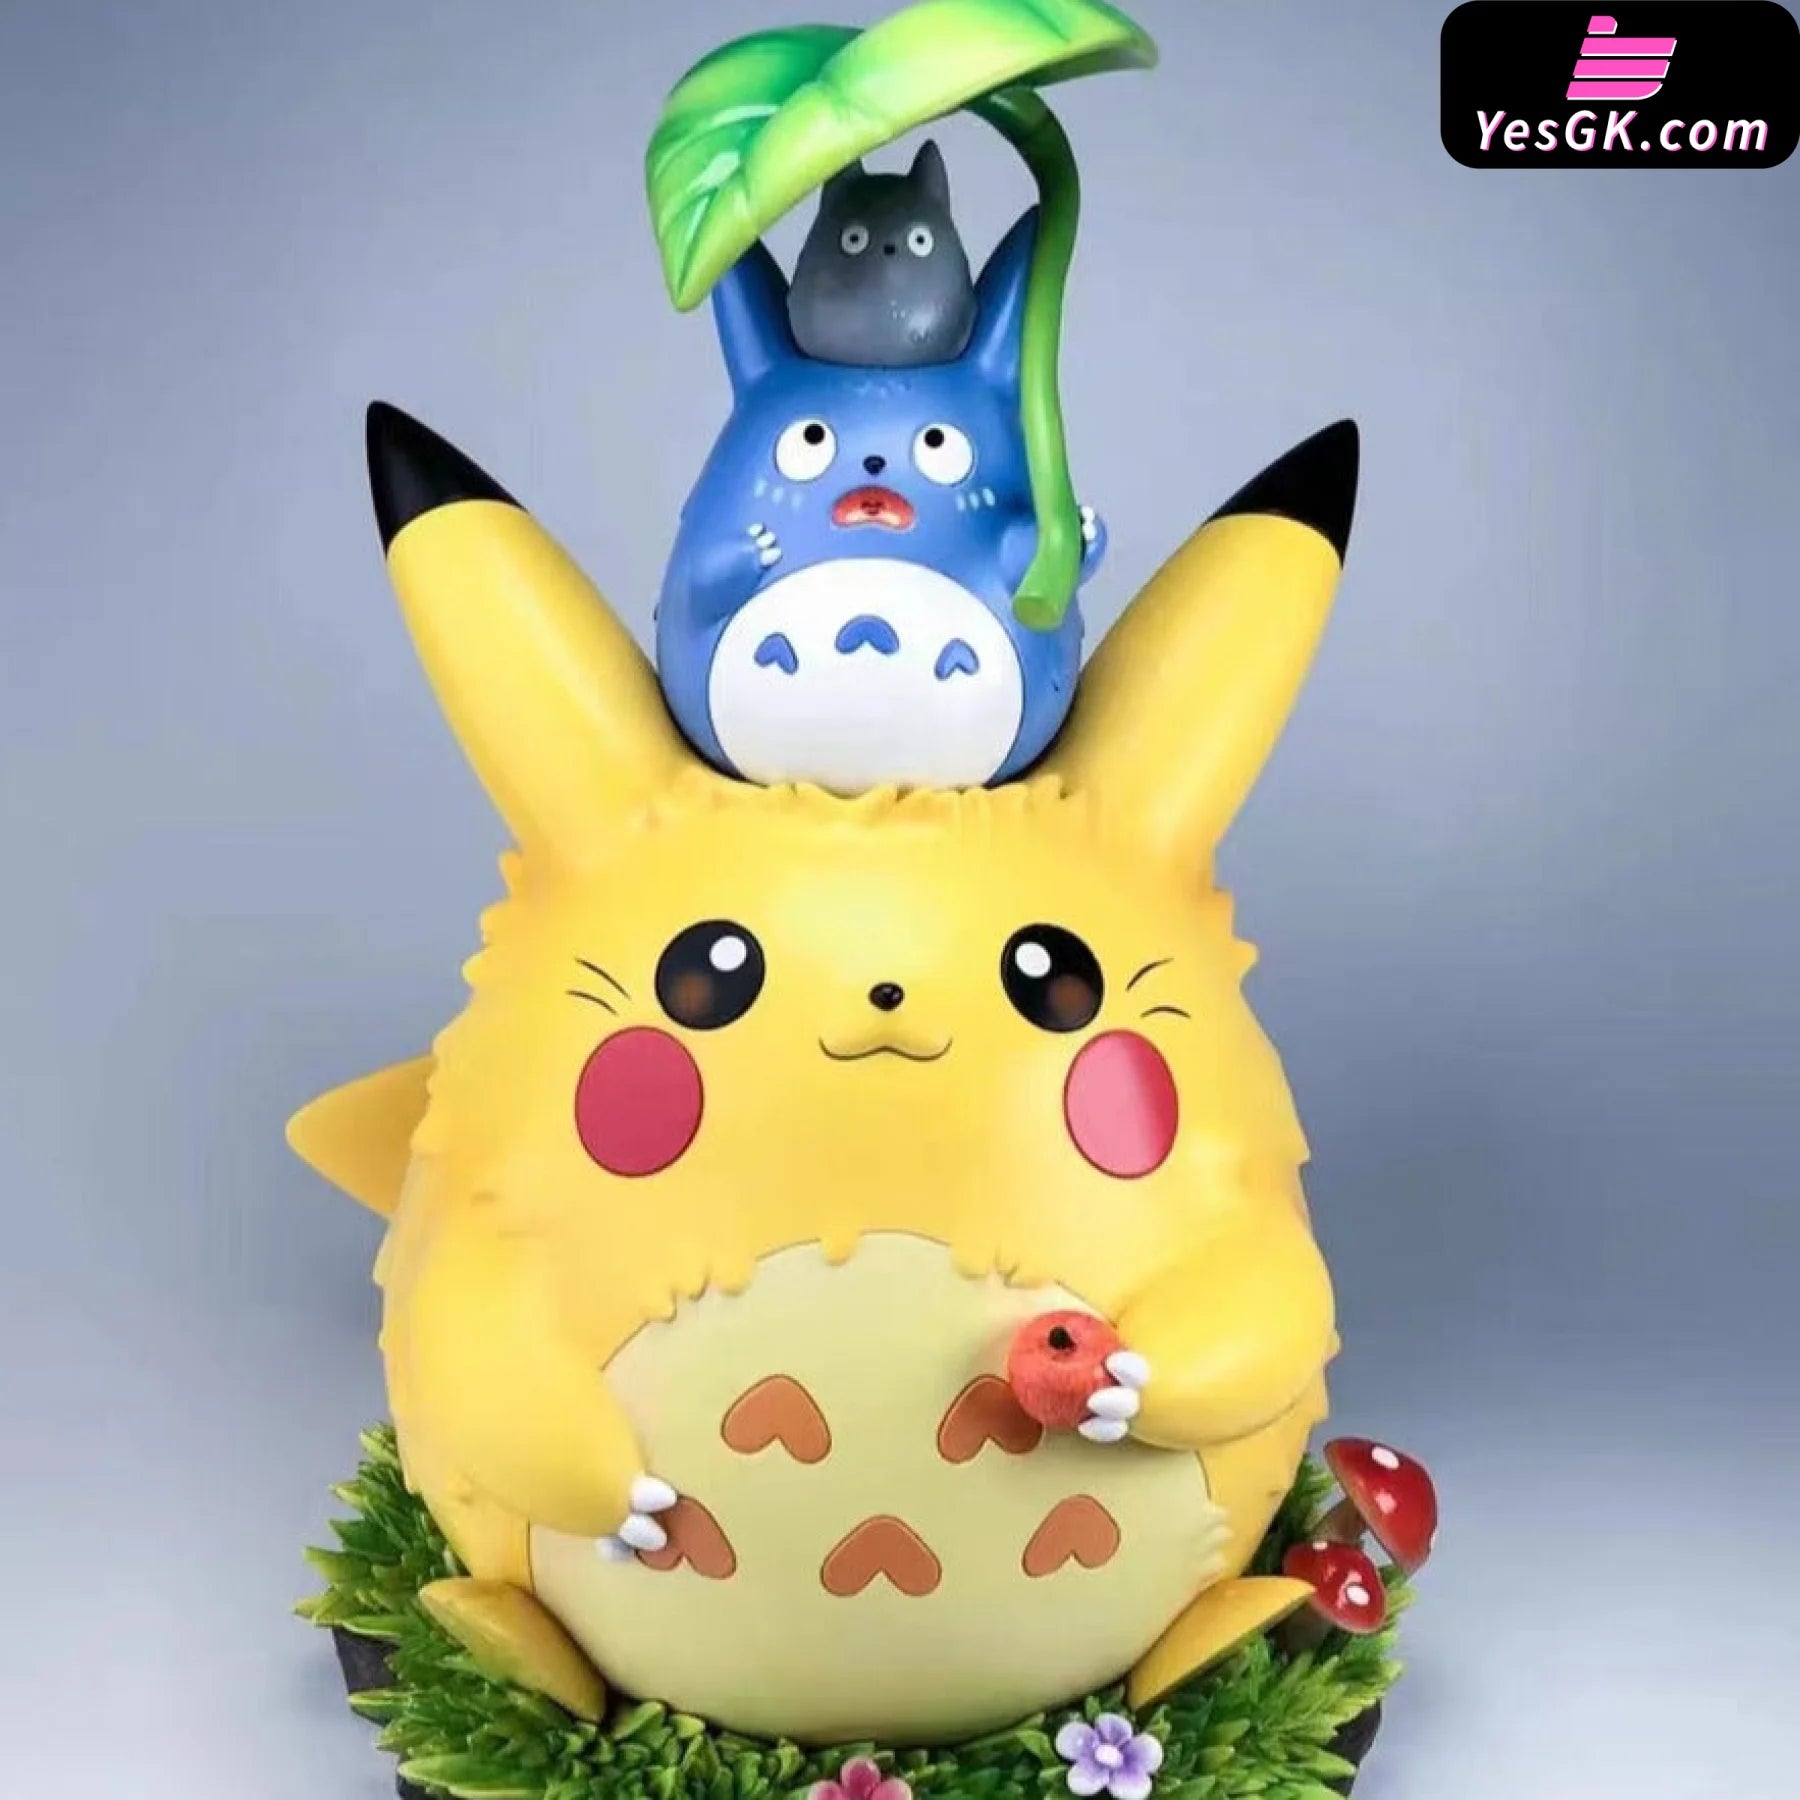 Pokémon My Neighbor Totoro Pikachu Statue - Bkw Studio [Pre-Order]